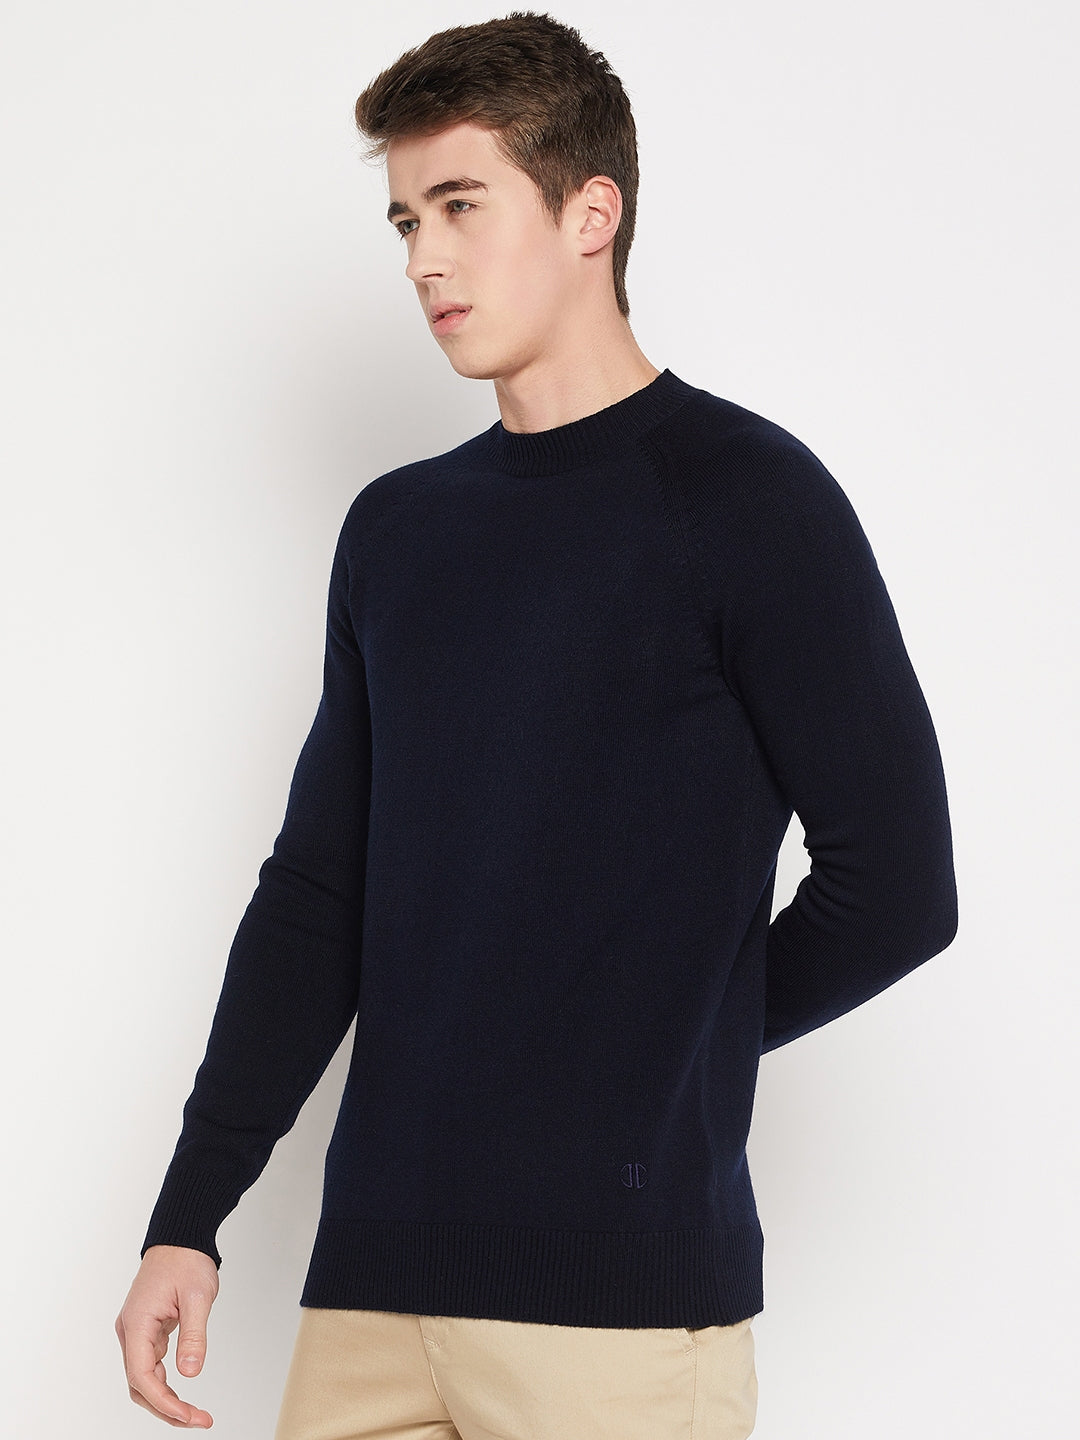 Camla Barcelona Navy Sweater For Men